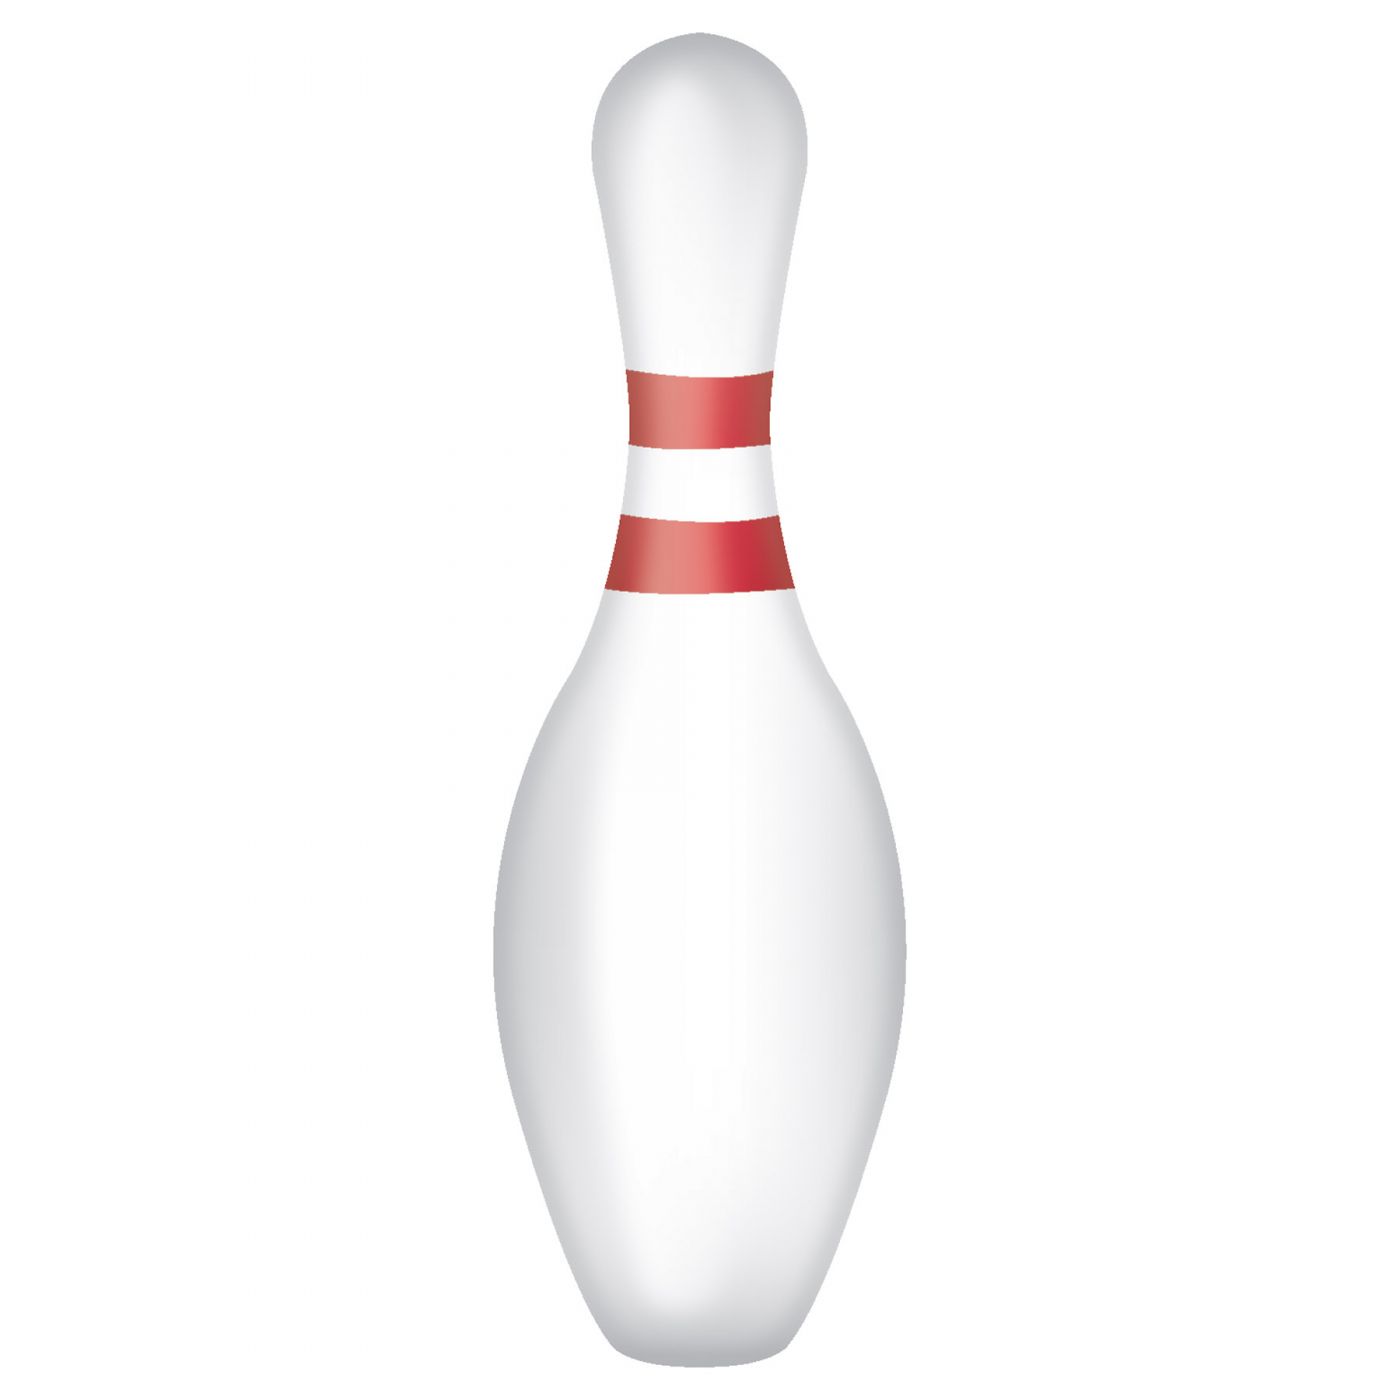 Image of Bowling Pin Cutout (24)